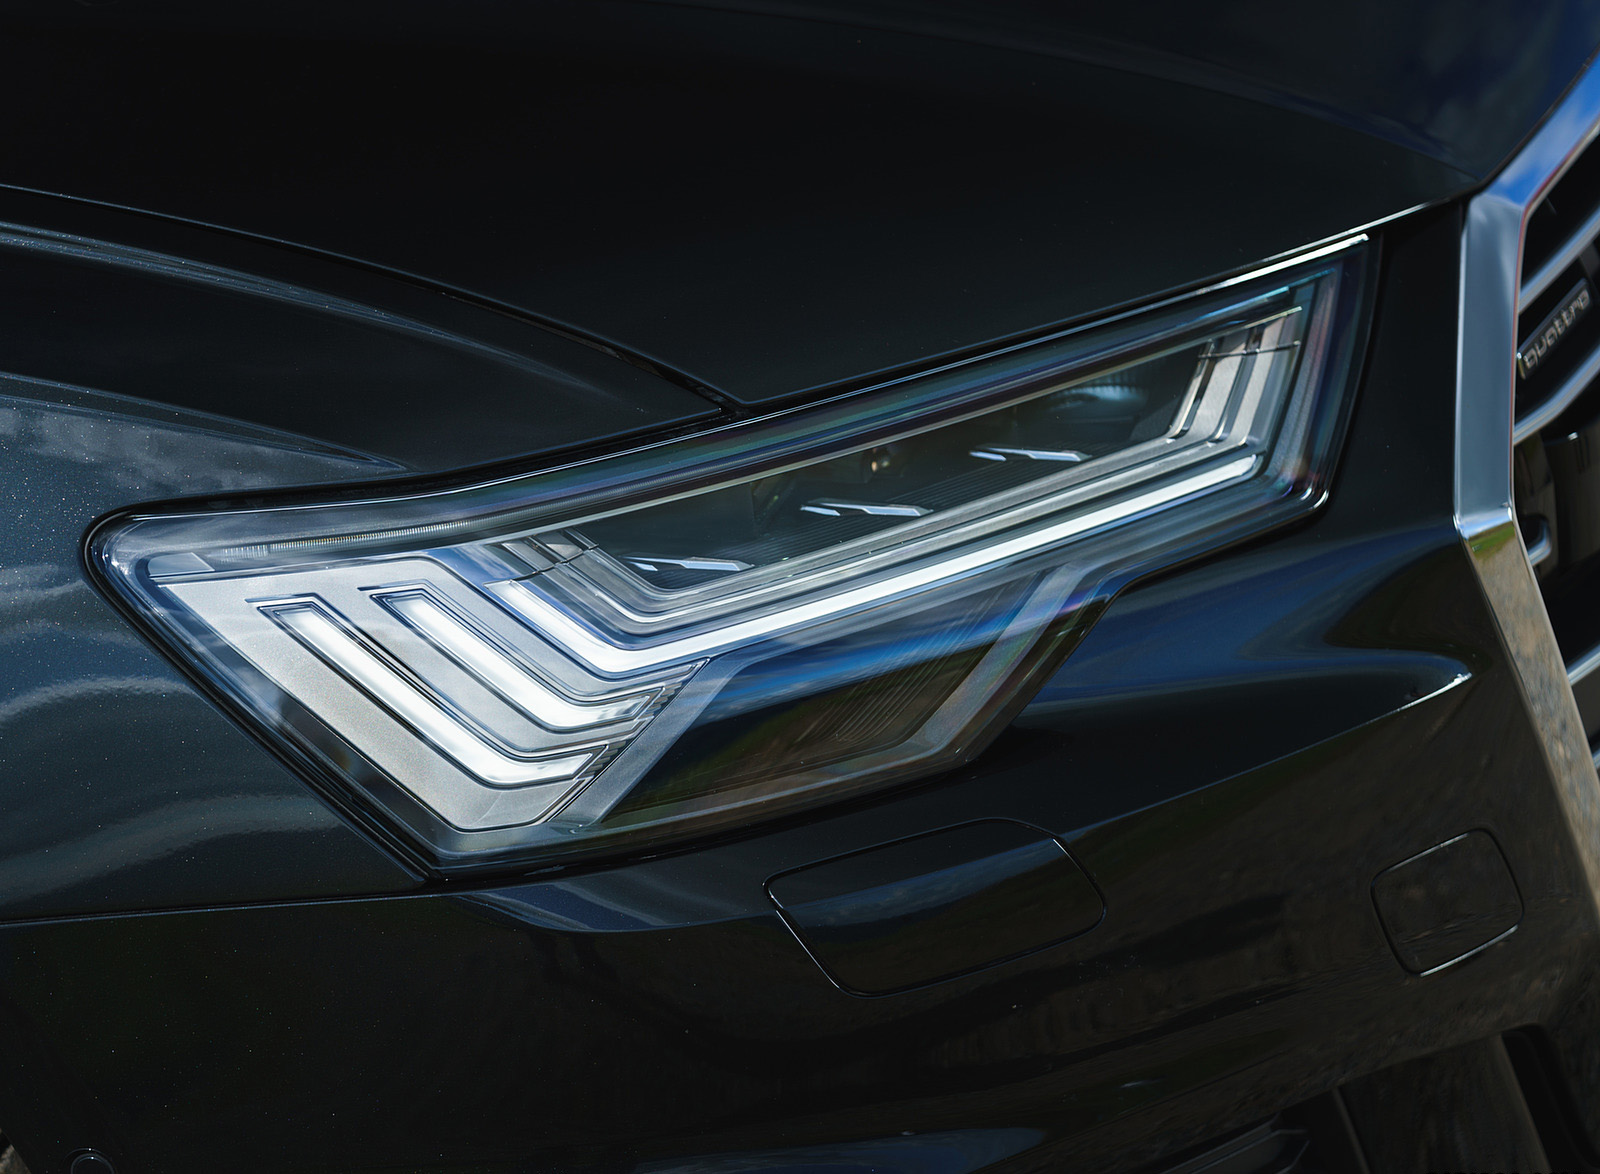 2019 Audi A6 Avant 50 TDI Quattro (UK-Spec) Headlight Wallpapers #33 of 62